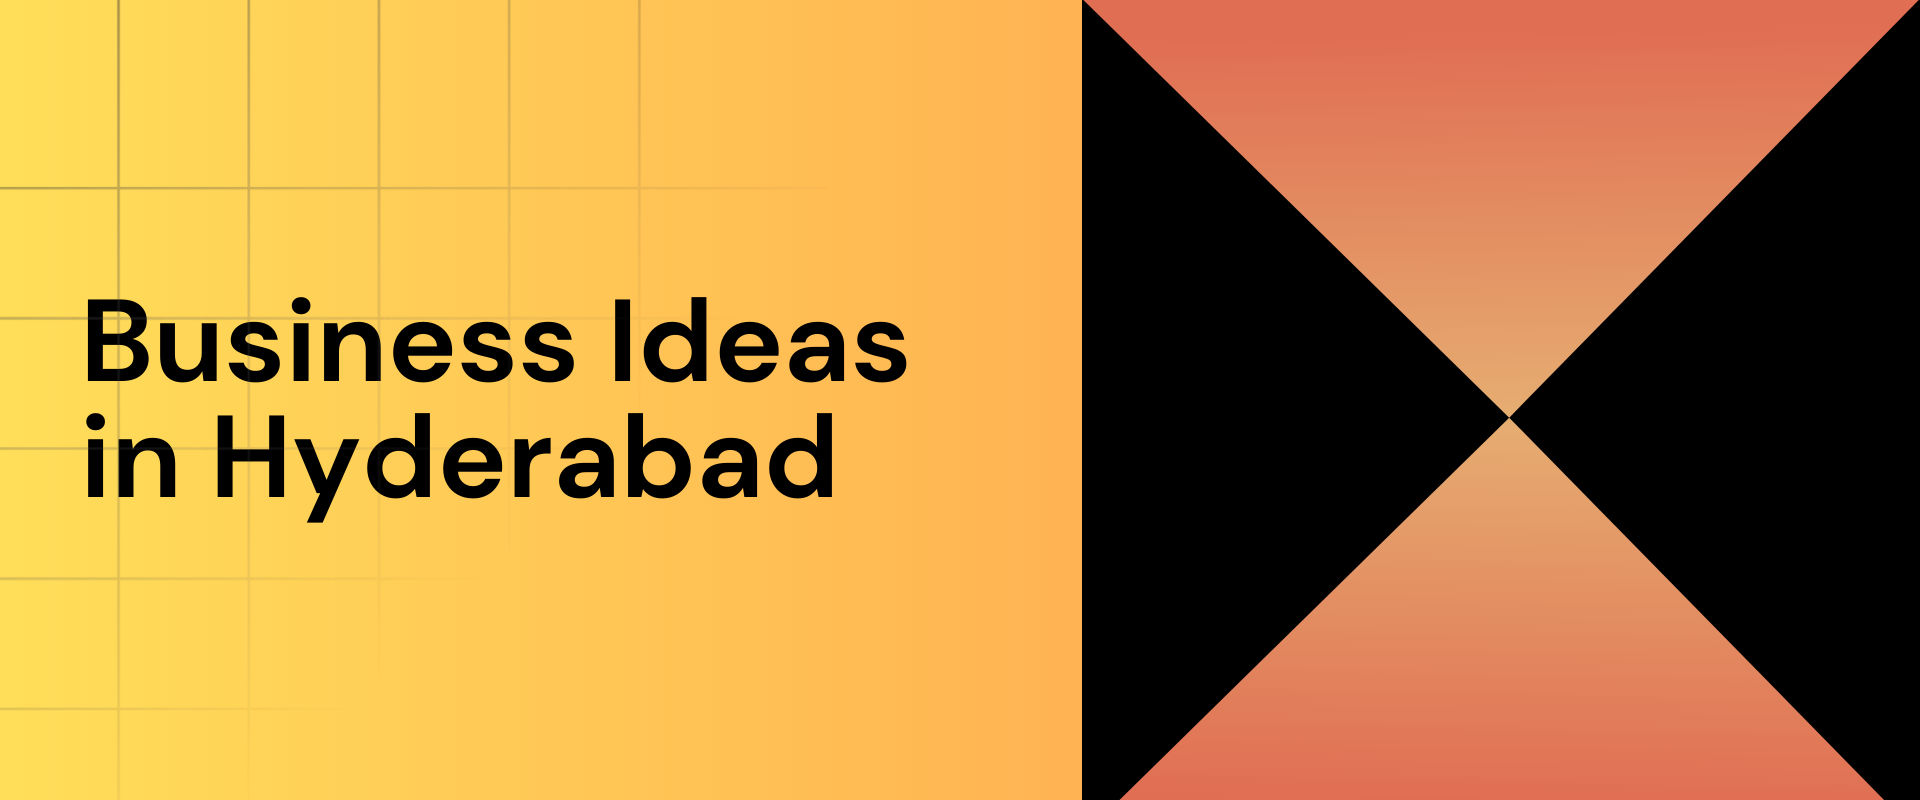 Business Ideas In Hyderabad